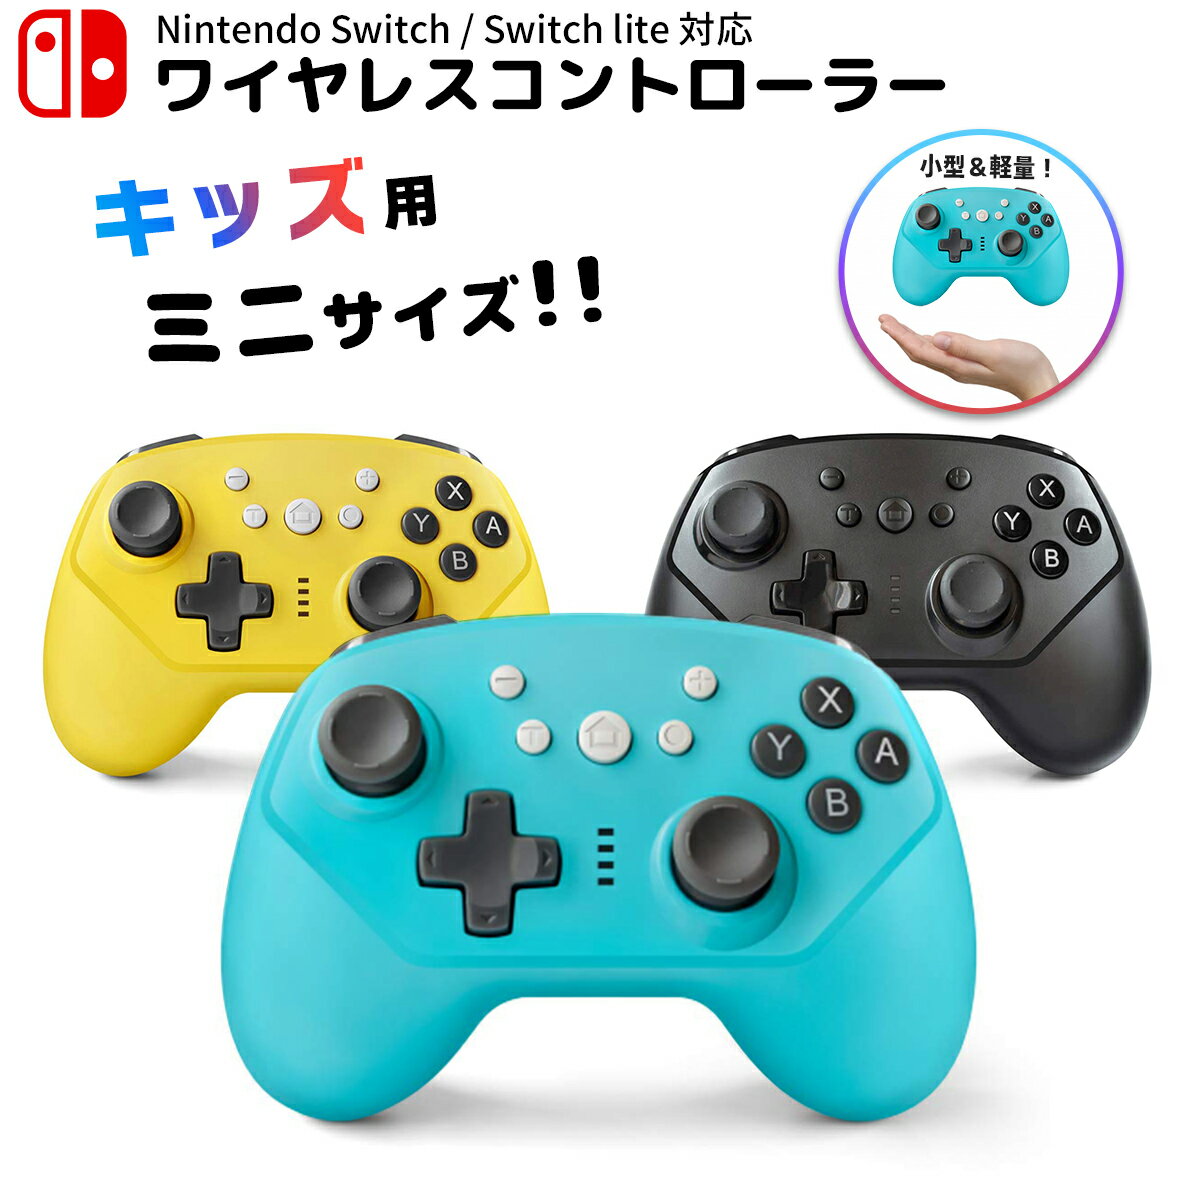 Nintendo Switch / Switch lite CX Rg[[ XCb` Bluetooth WCR vR Joy-Con CX Rg[[  WCZT[ HDU A CV jeh[ PC / Android Ή    